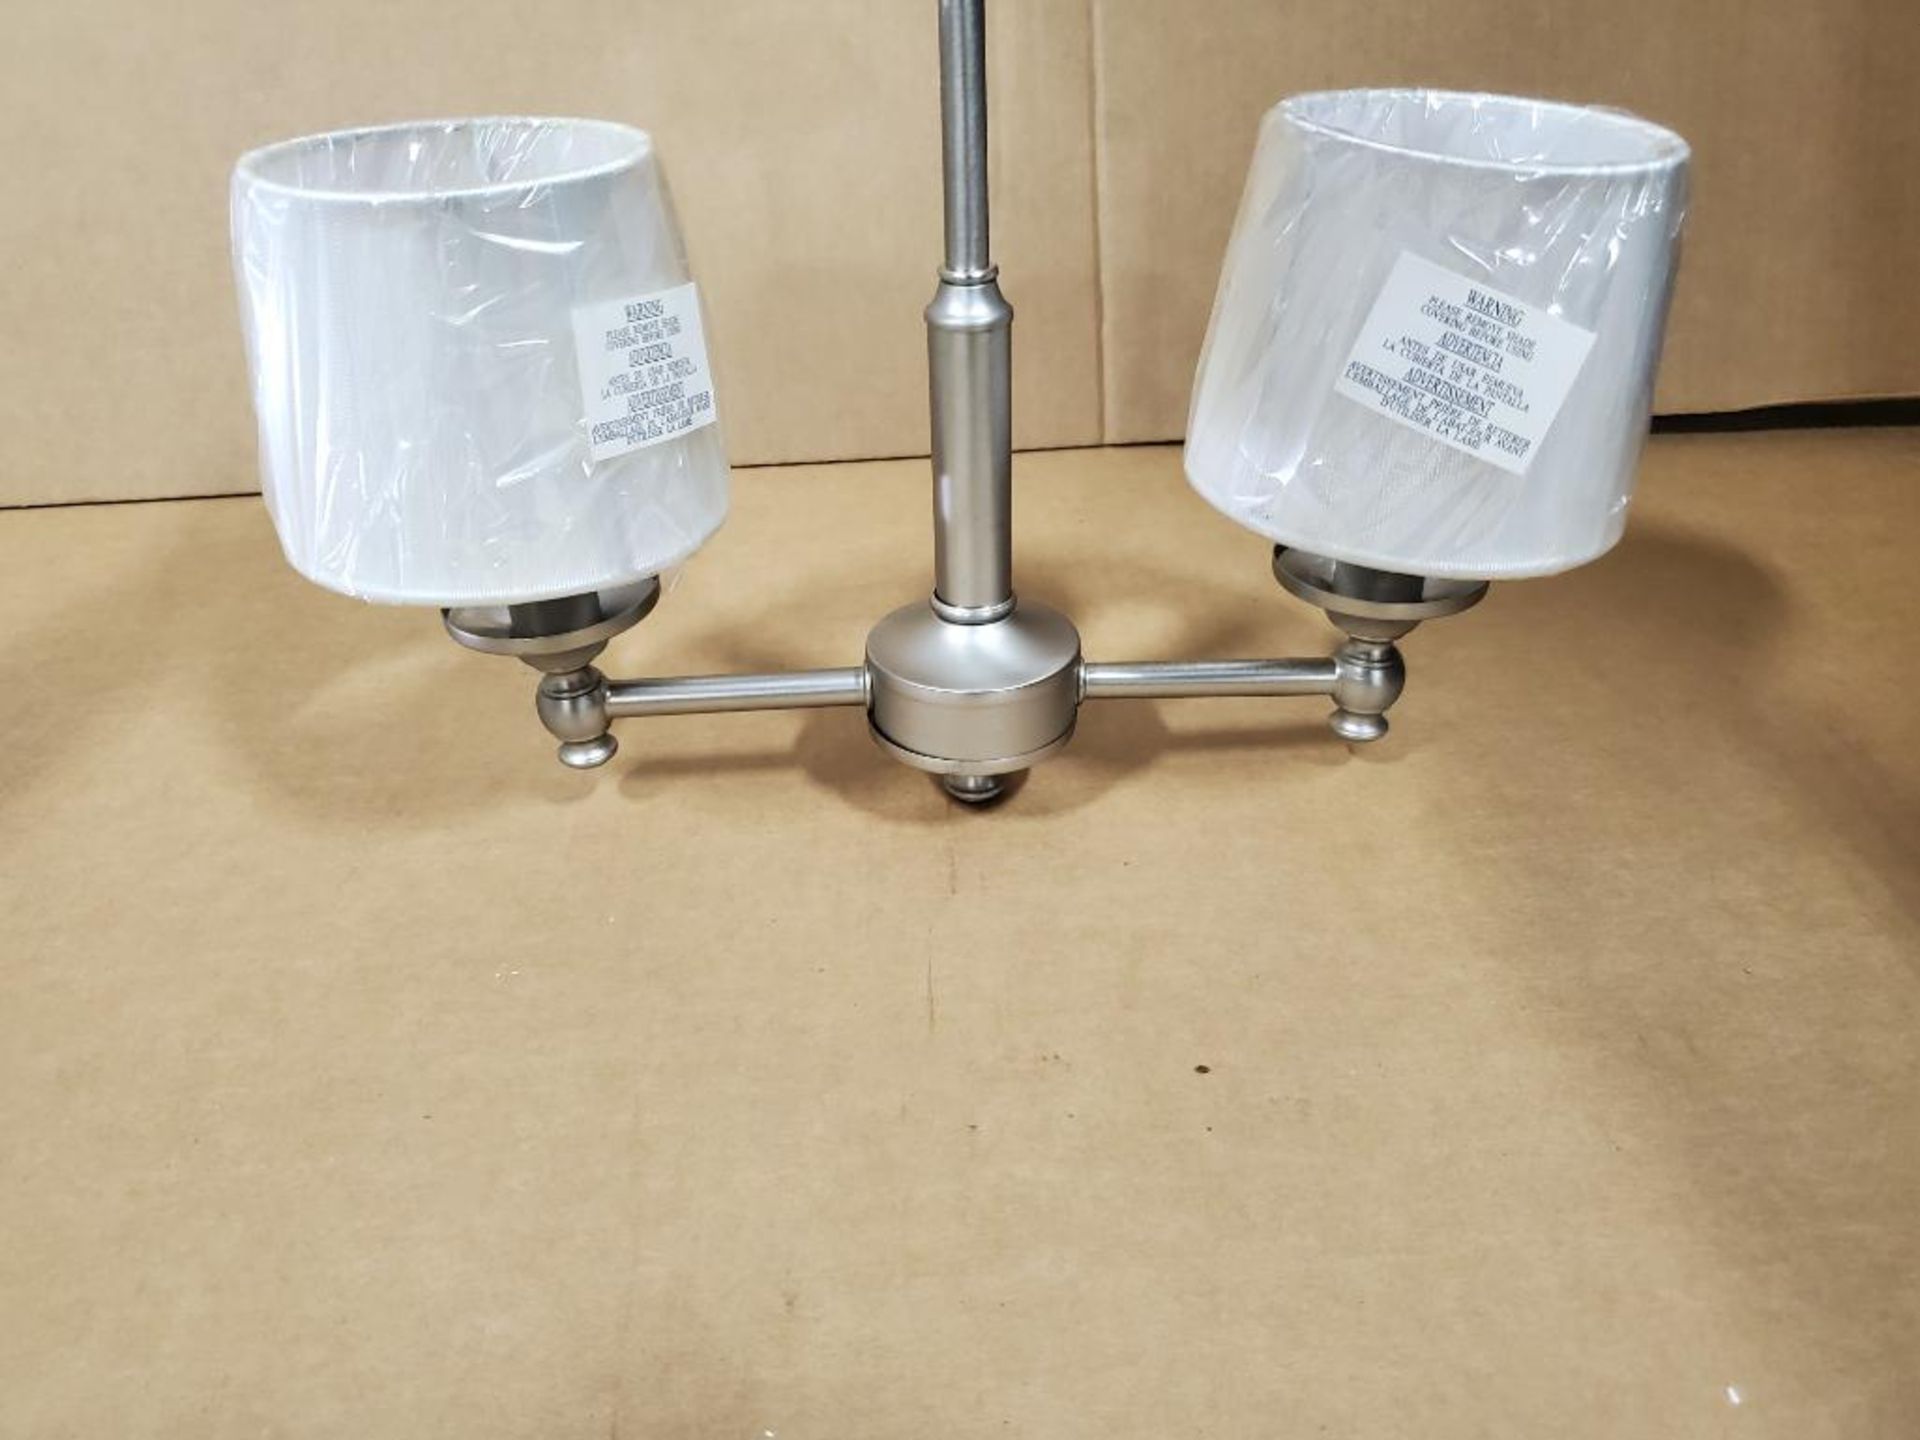 Qty 96 - SunLink 12 volt 2-light chandelier. Part #RV-185302-401. New in bulk box. - Image 2 of 9